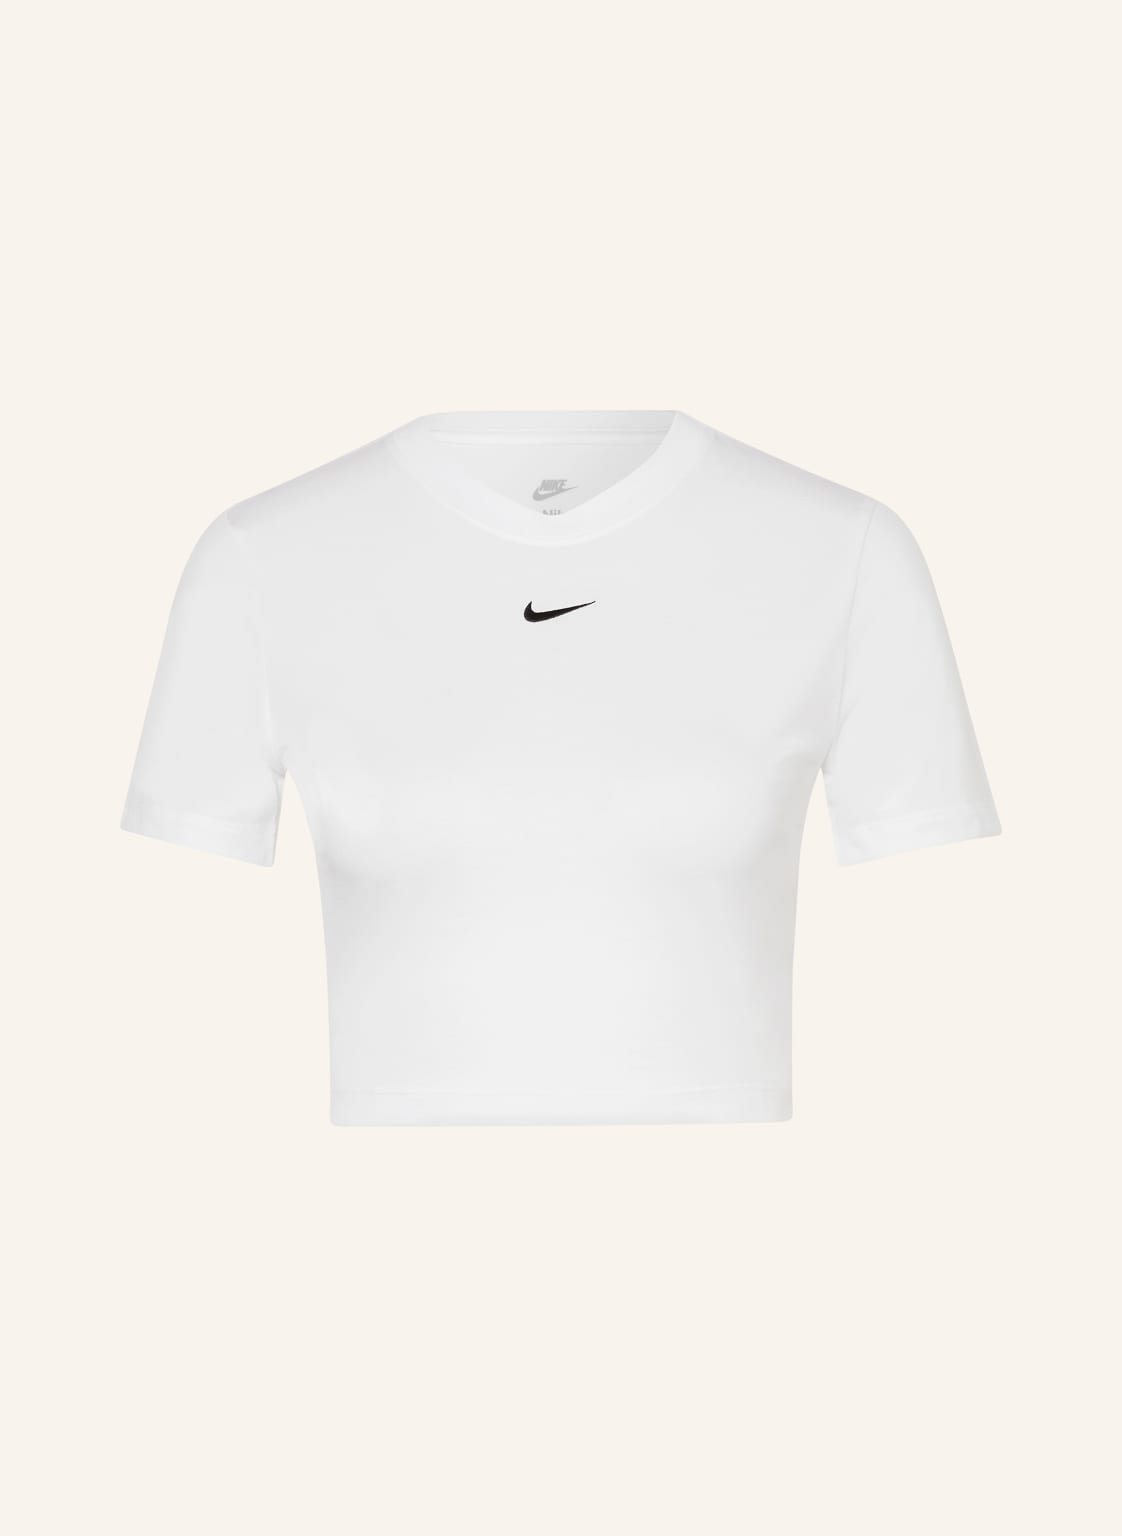 Nike Cropped-Shirt weiss von Nike